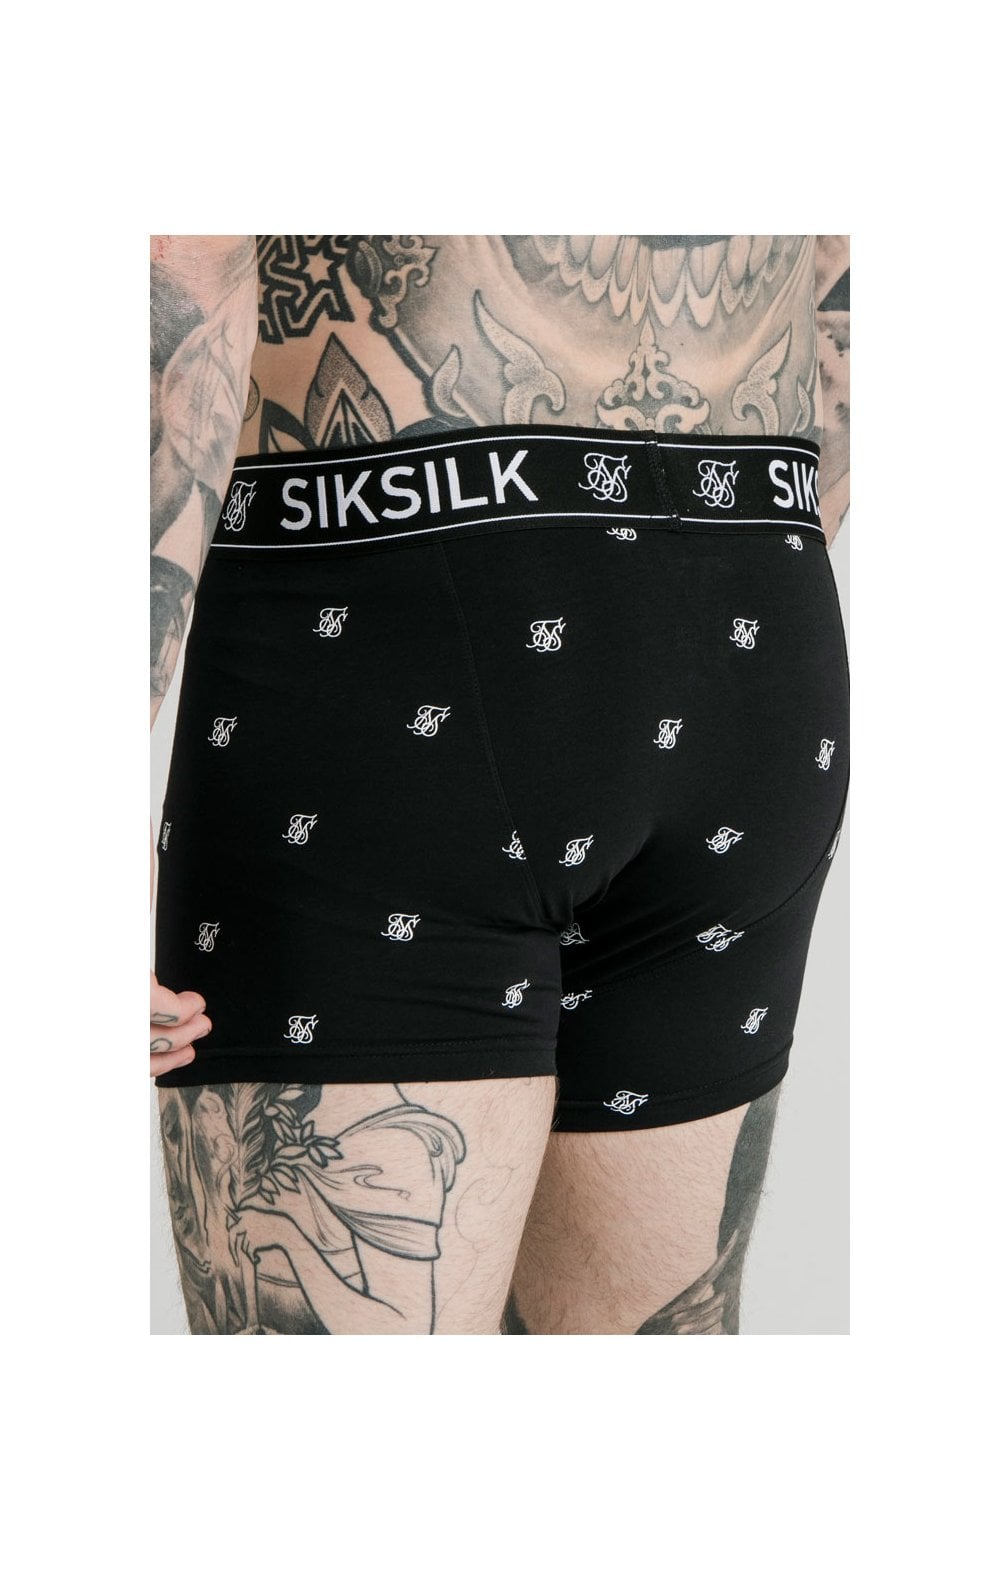 SikSilk Logo Taped Boxer Shorts (2 Pack) - White &amp; Black Pack of 2 Boxers - 1 White pair and 1 Black pair (5)